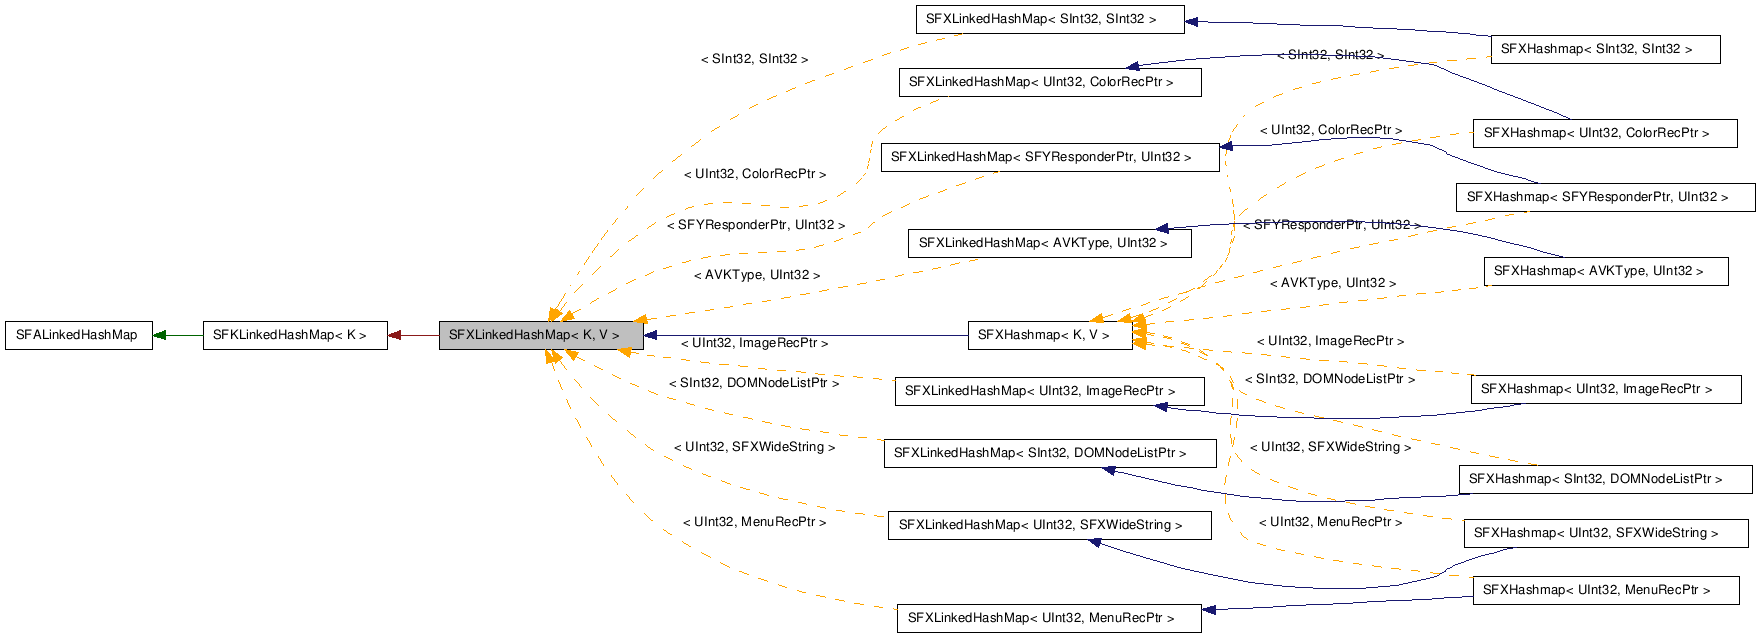  Inheritance diagram of SFXLinkedHashMapClass